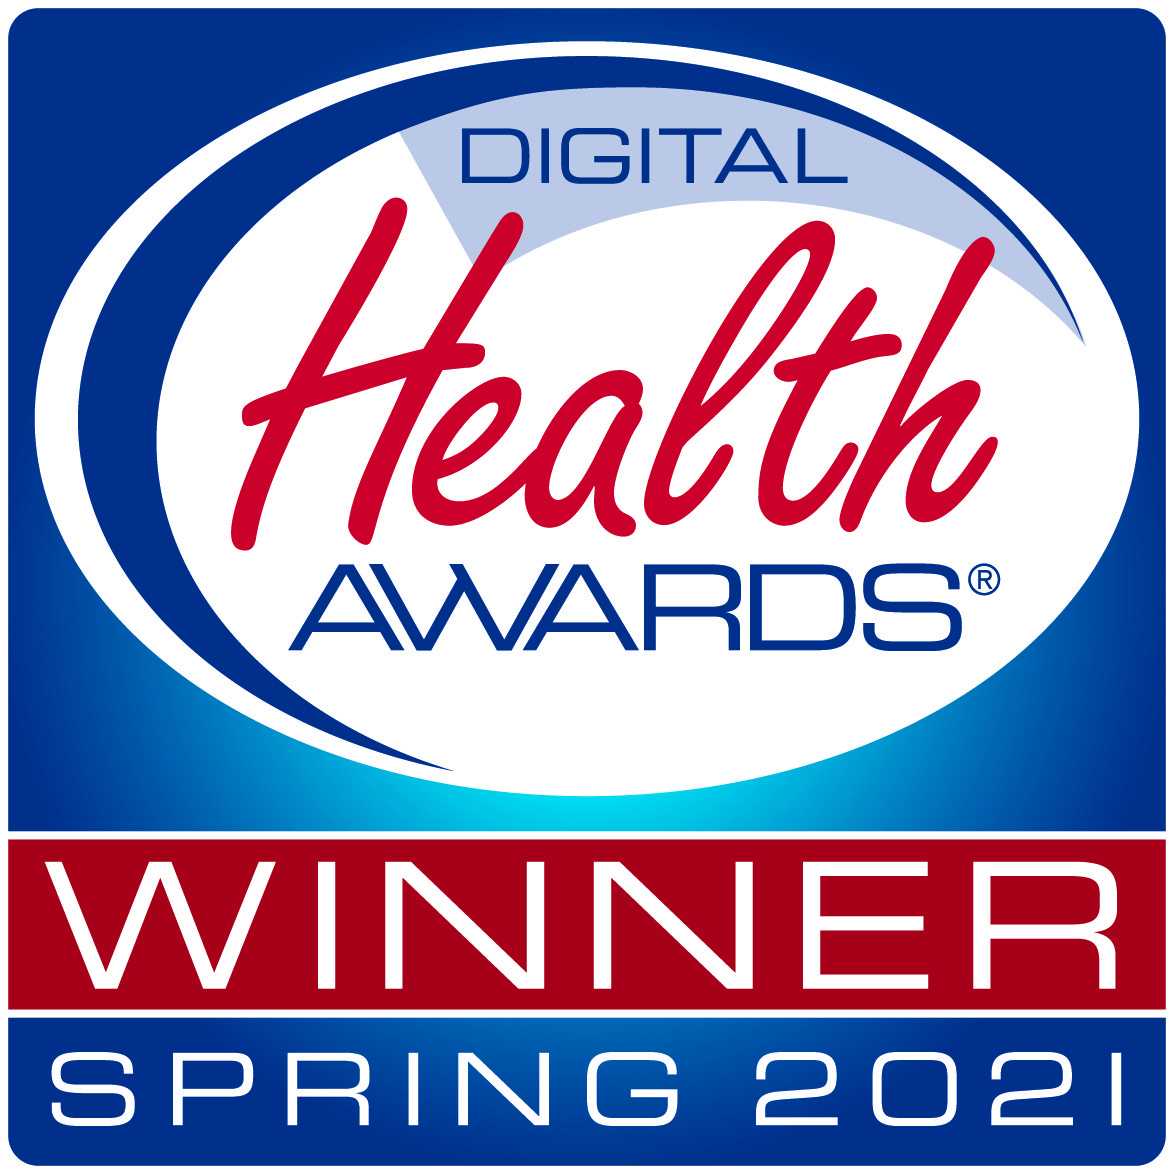 Digital Health Awards Spring 2021